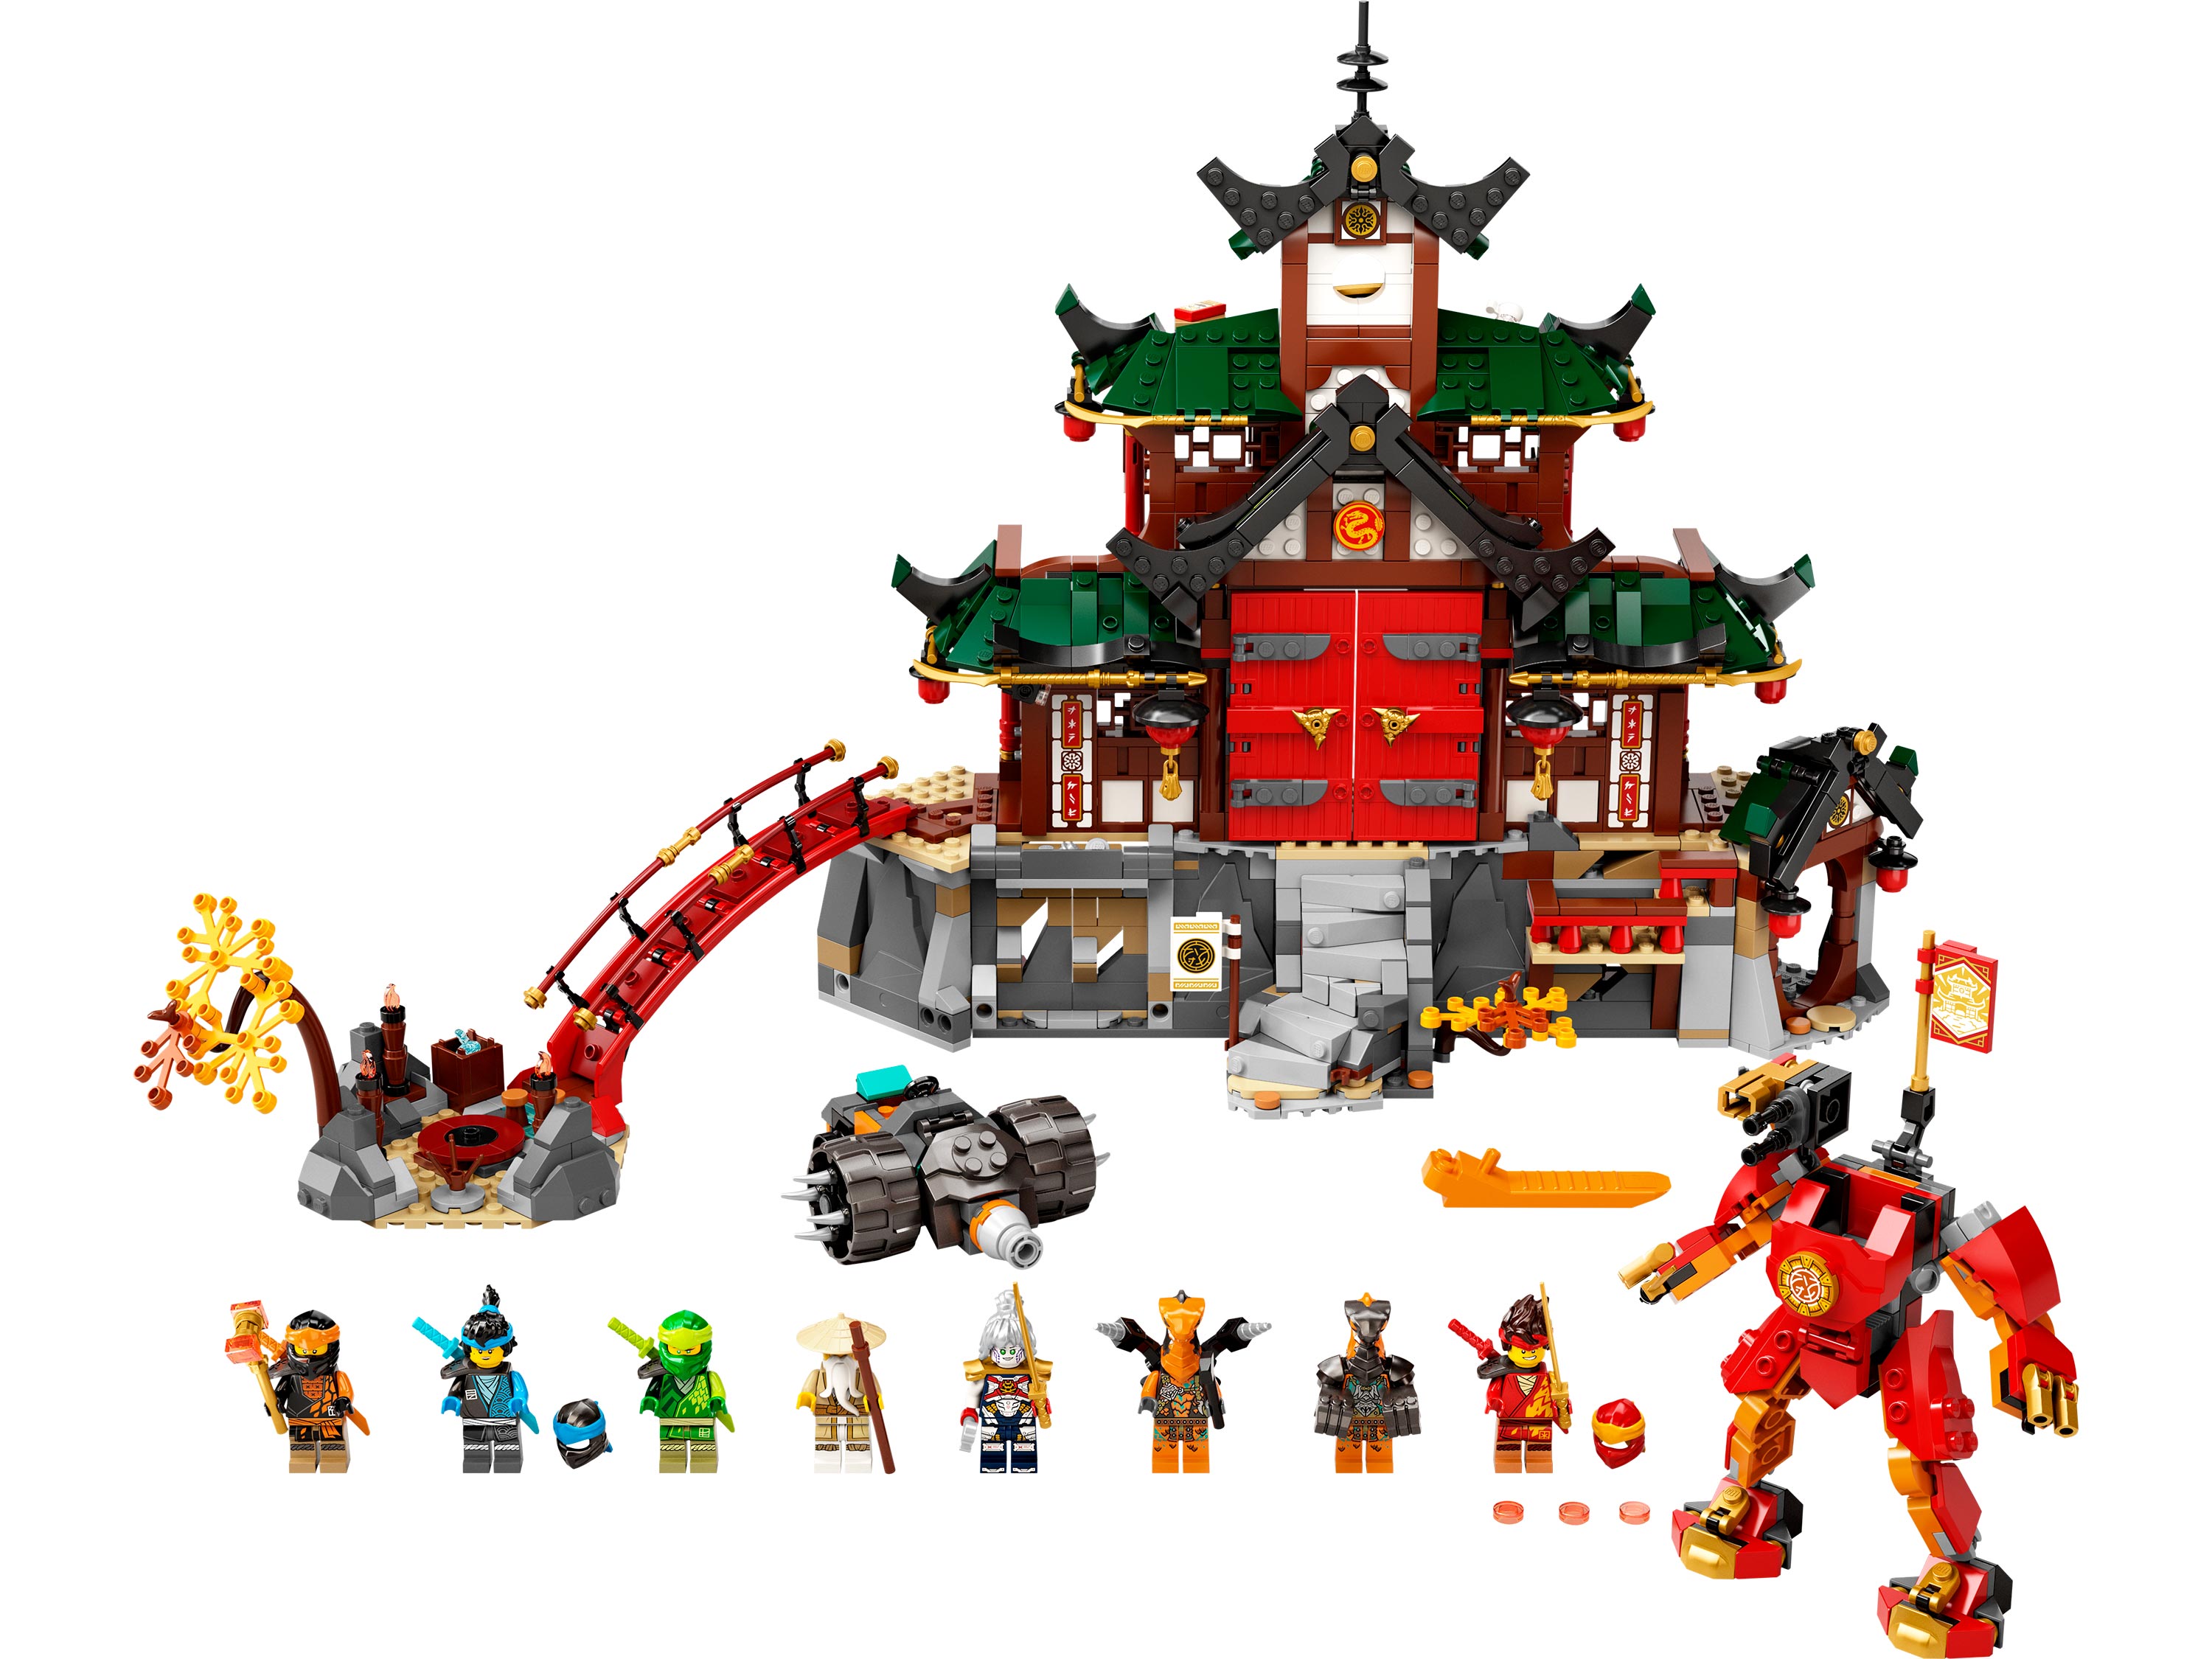 Конструктор Lego Ninjago 71767 Храм-додзё ниндзя